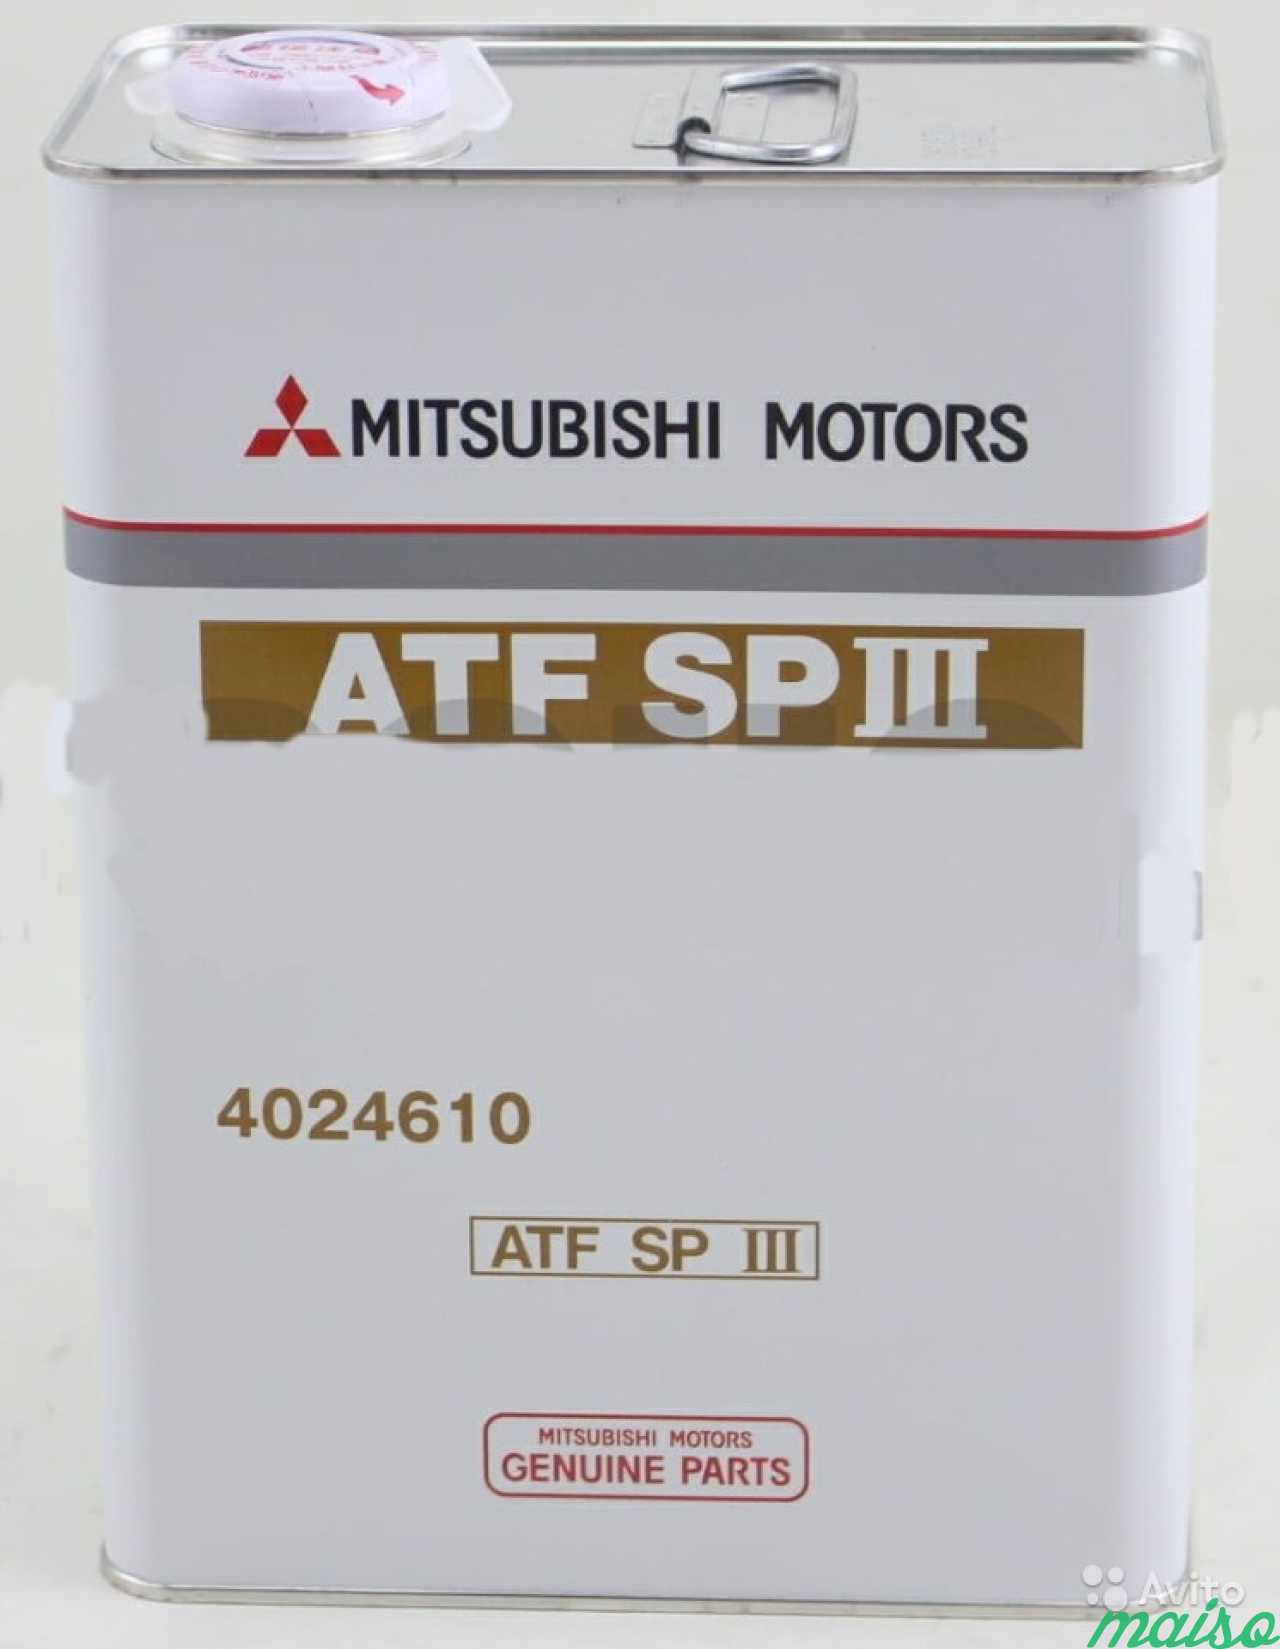 Atf sp3 4л. Mitsubishi ATF SP III 4024610. Mitsubishi ATF SP-III 4л. 4024610 Mitsubishi.